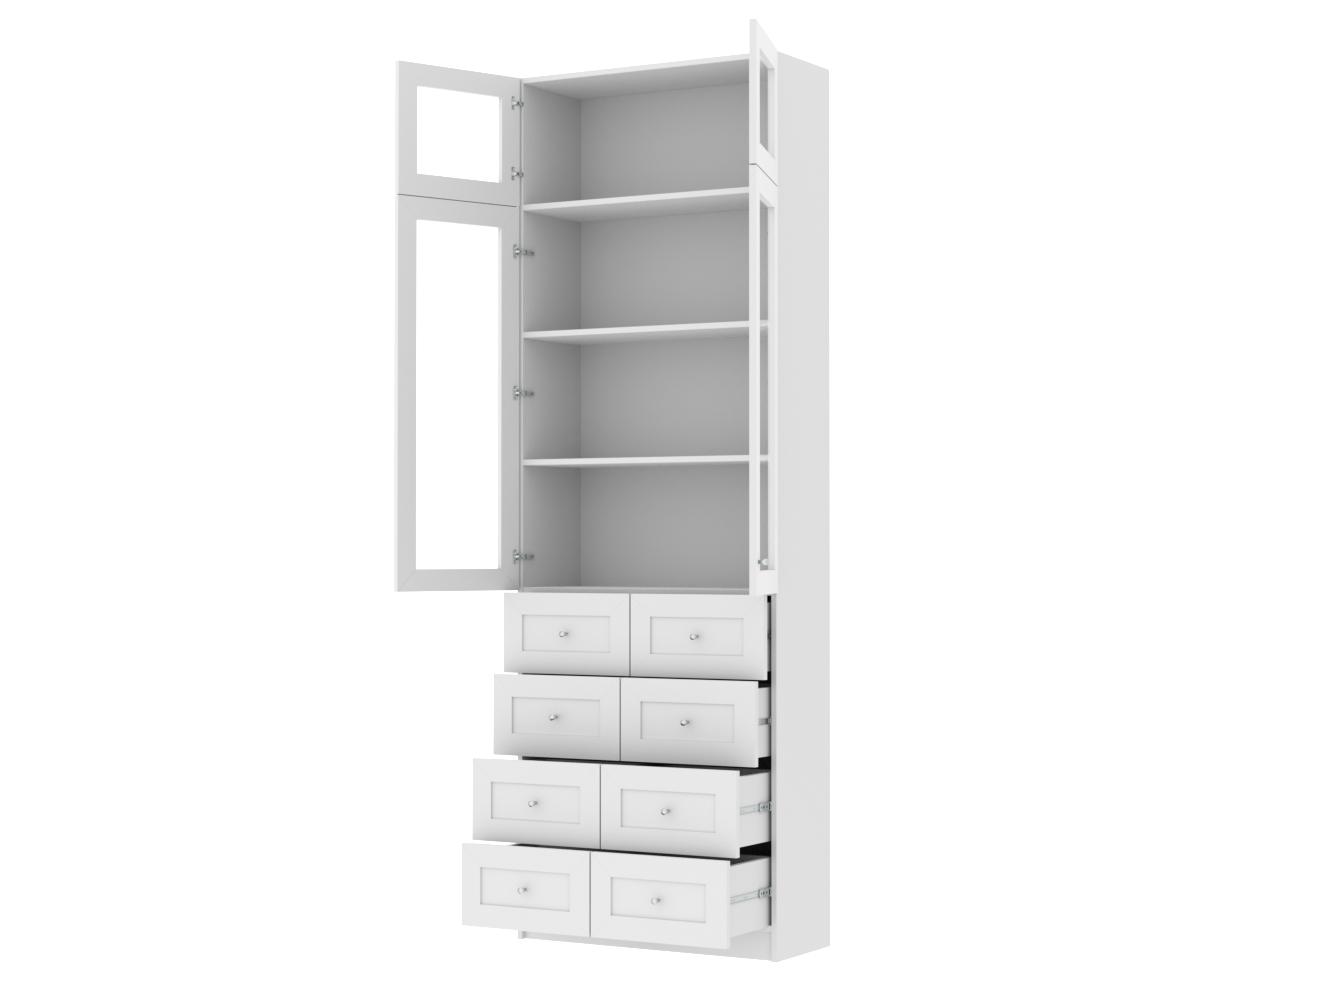  Книжный шкаф Билли 320 white ИКЕА (IKEA) изображение товара